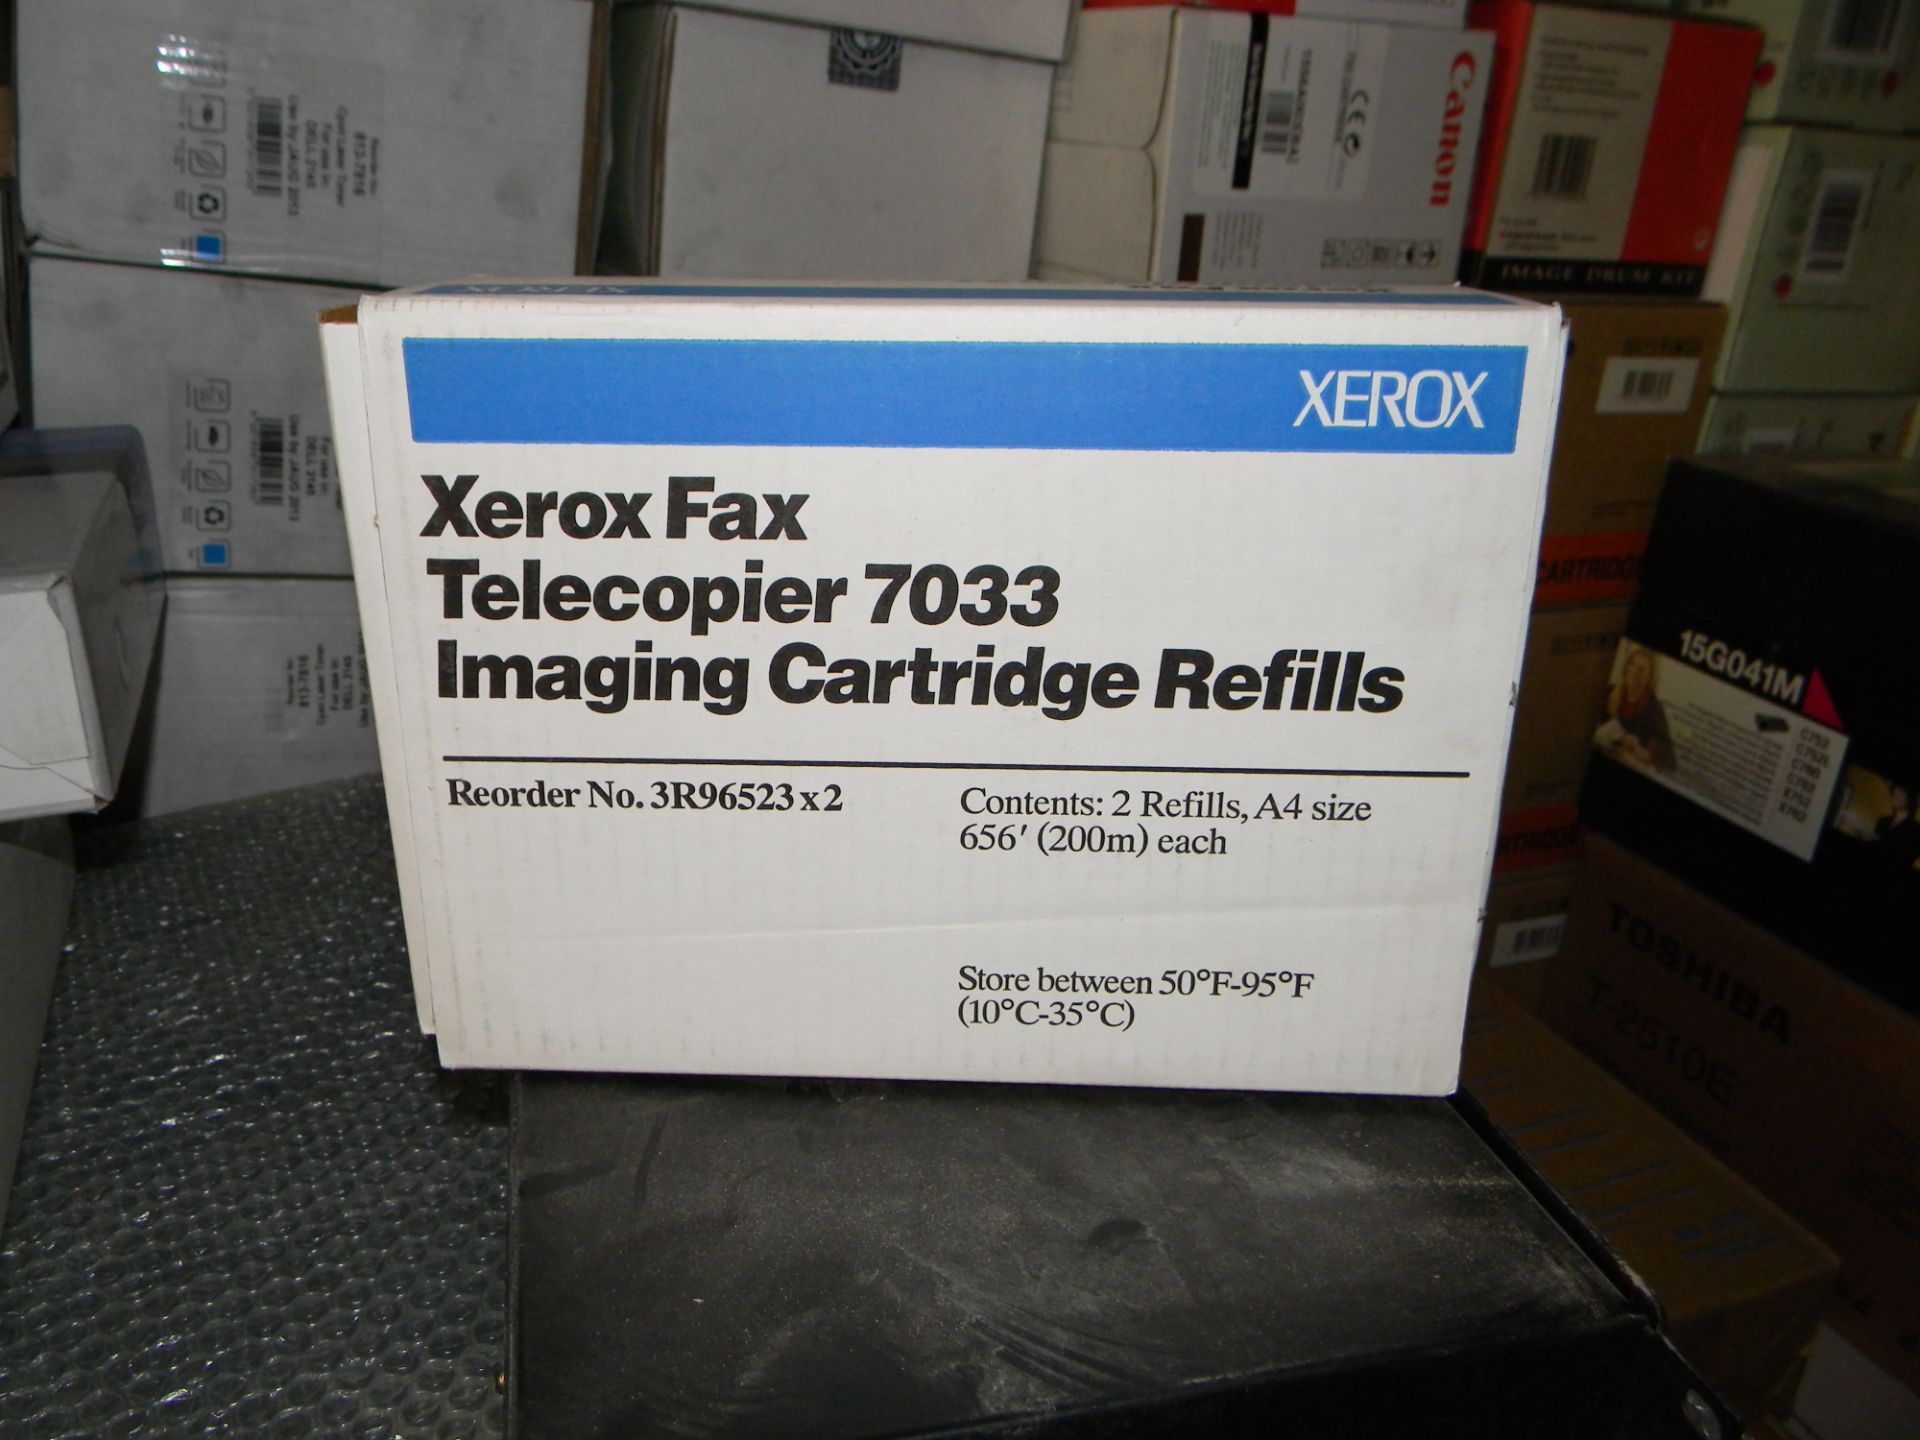 Xerox Imagings Cartridge refills - Image 2 of 2